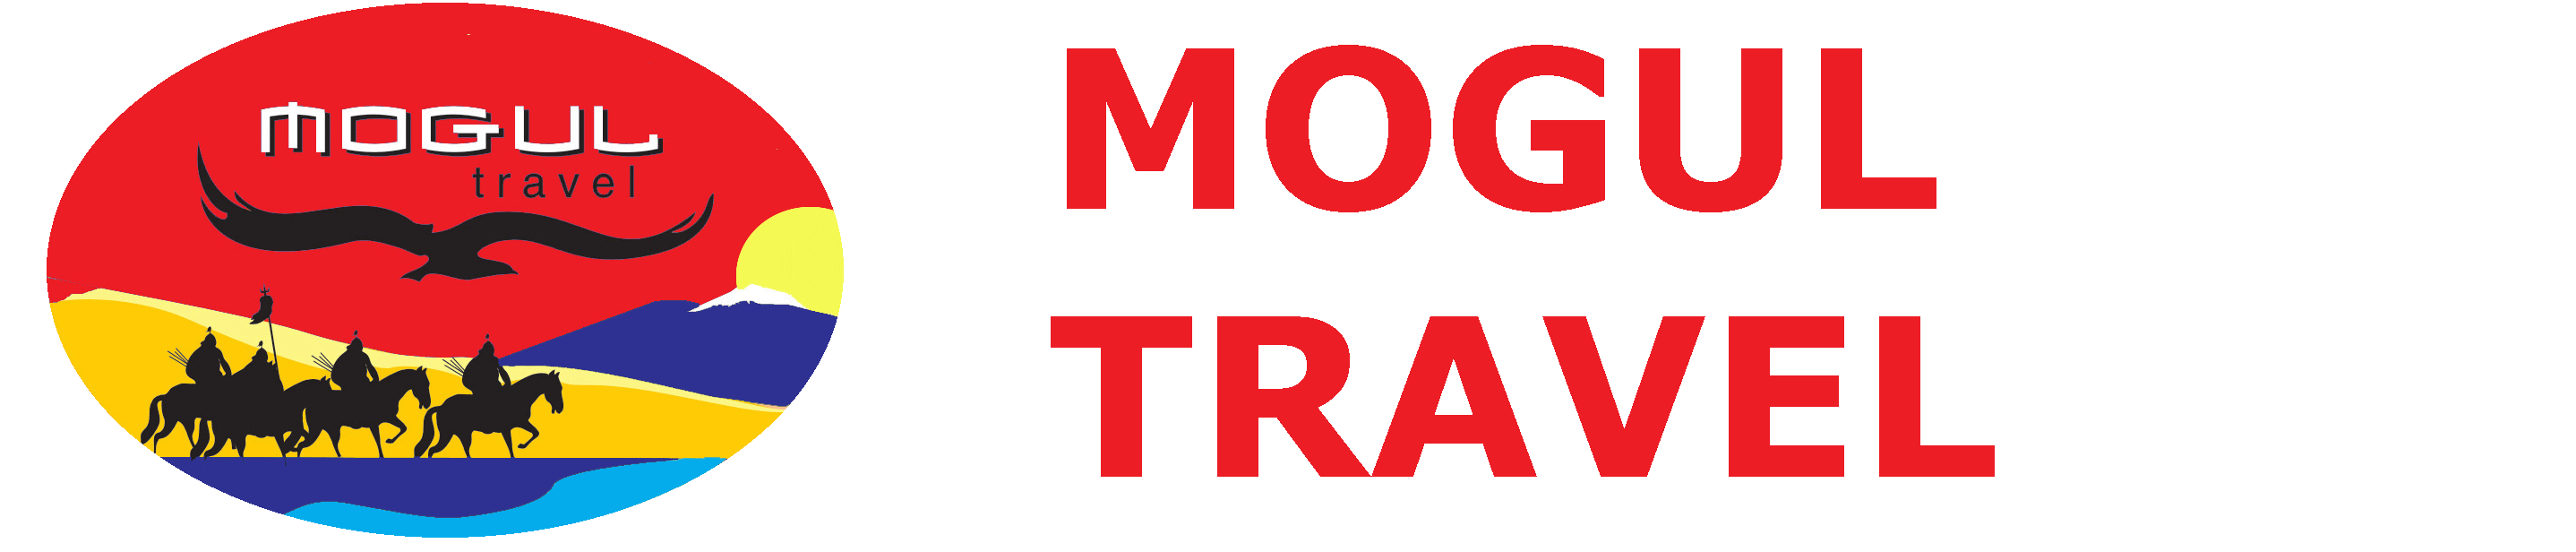 Mongolia Logo - An epic horseback riding trek travel, tours and expeditions